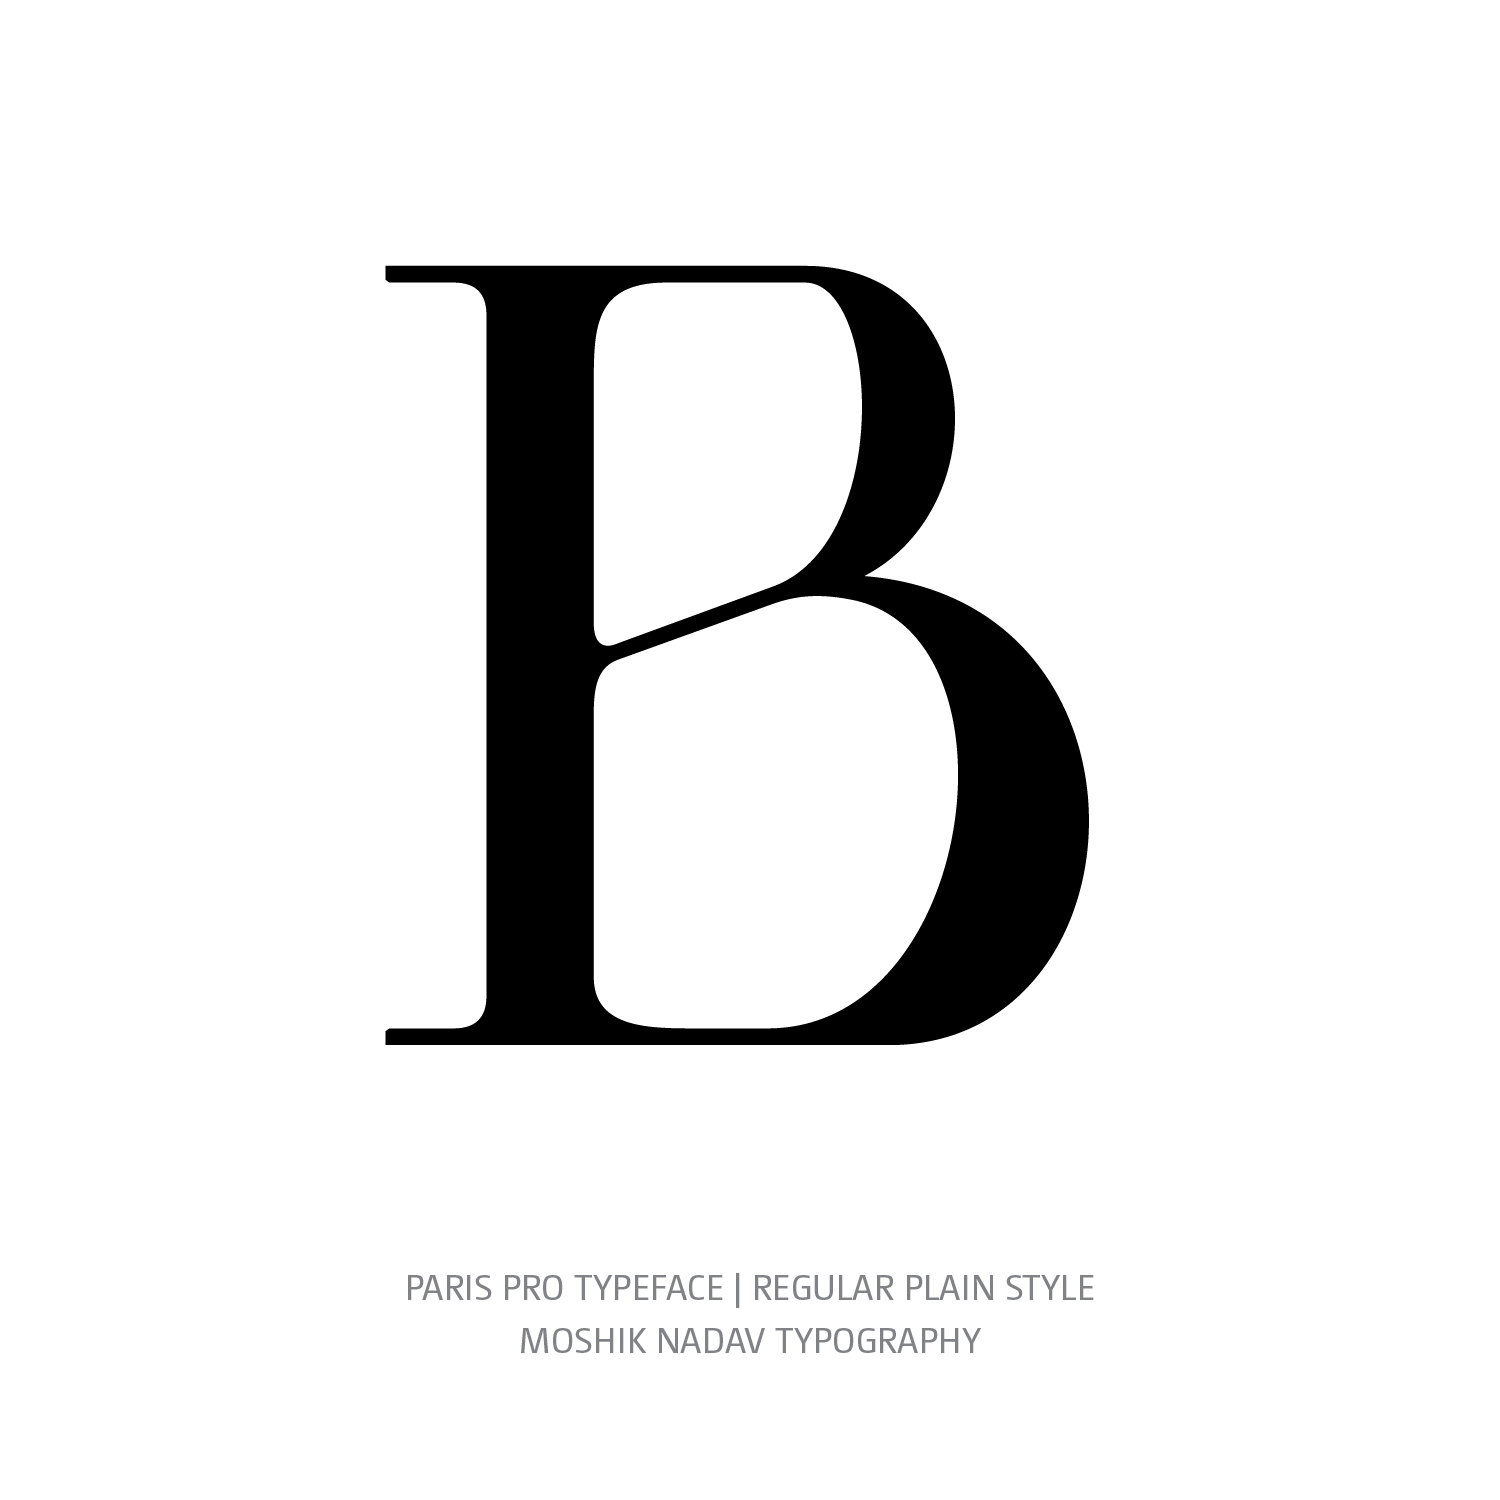 Paris Pro Typeface Regular Plain B